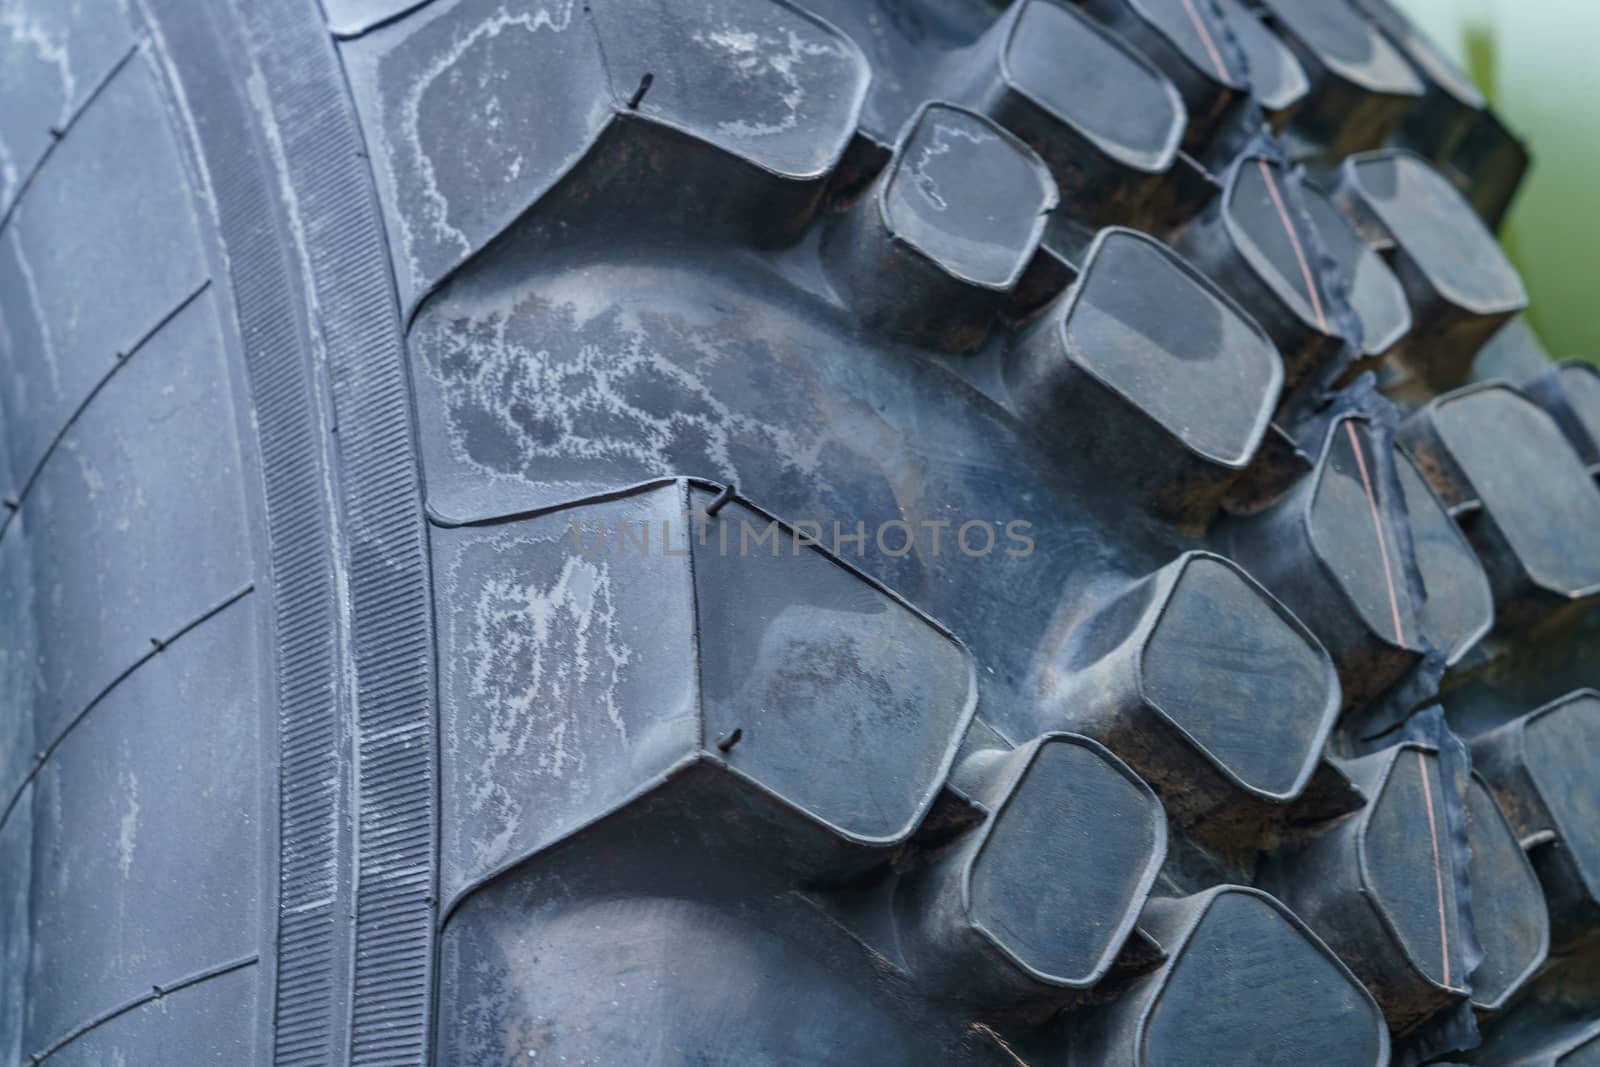 dark rough rubber truck tire, fragment